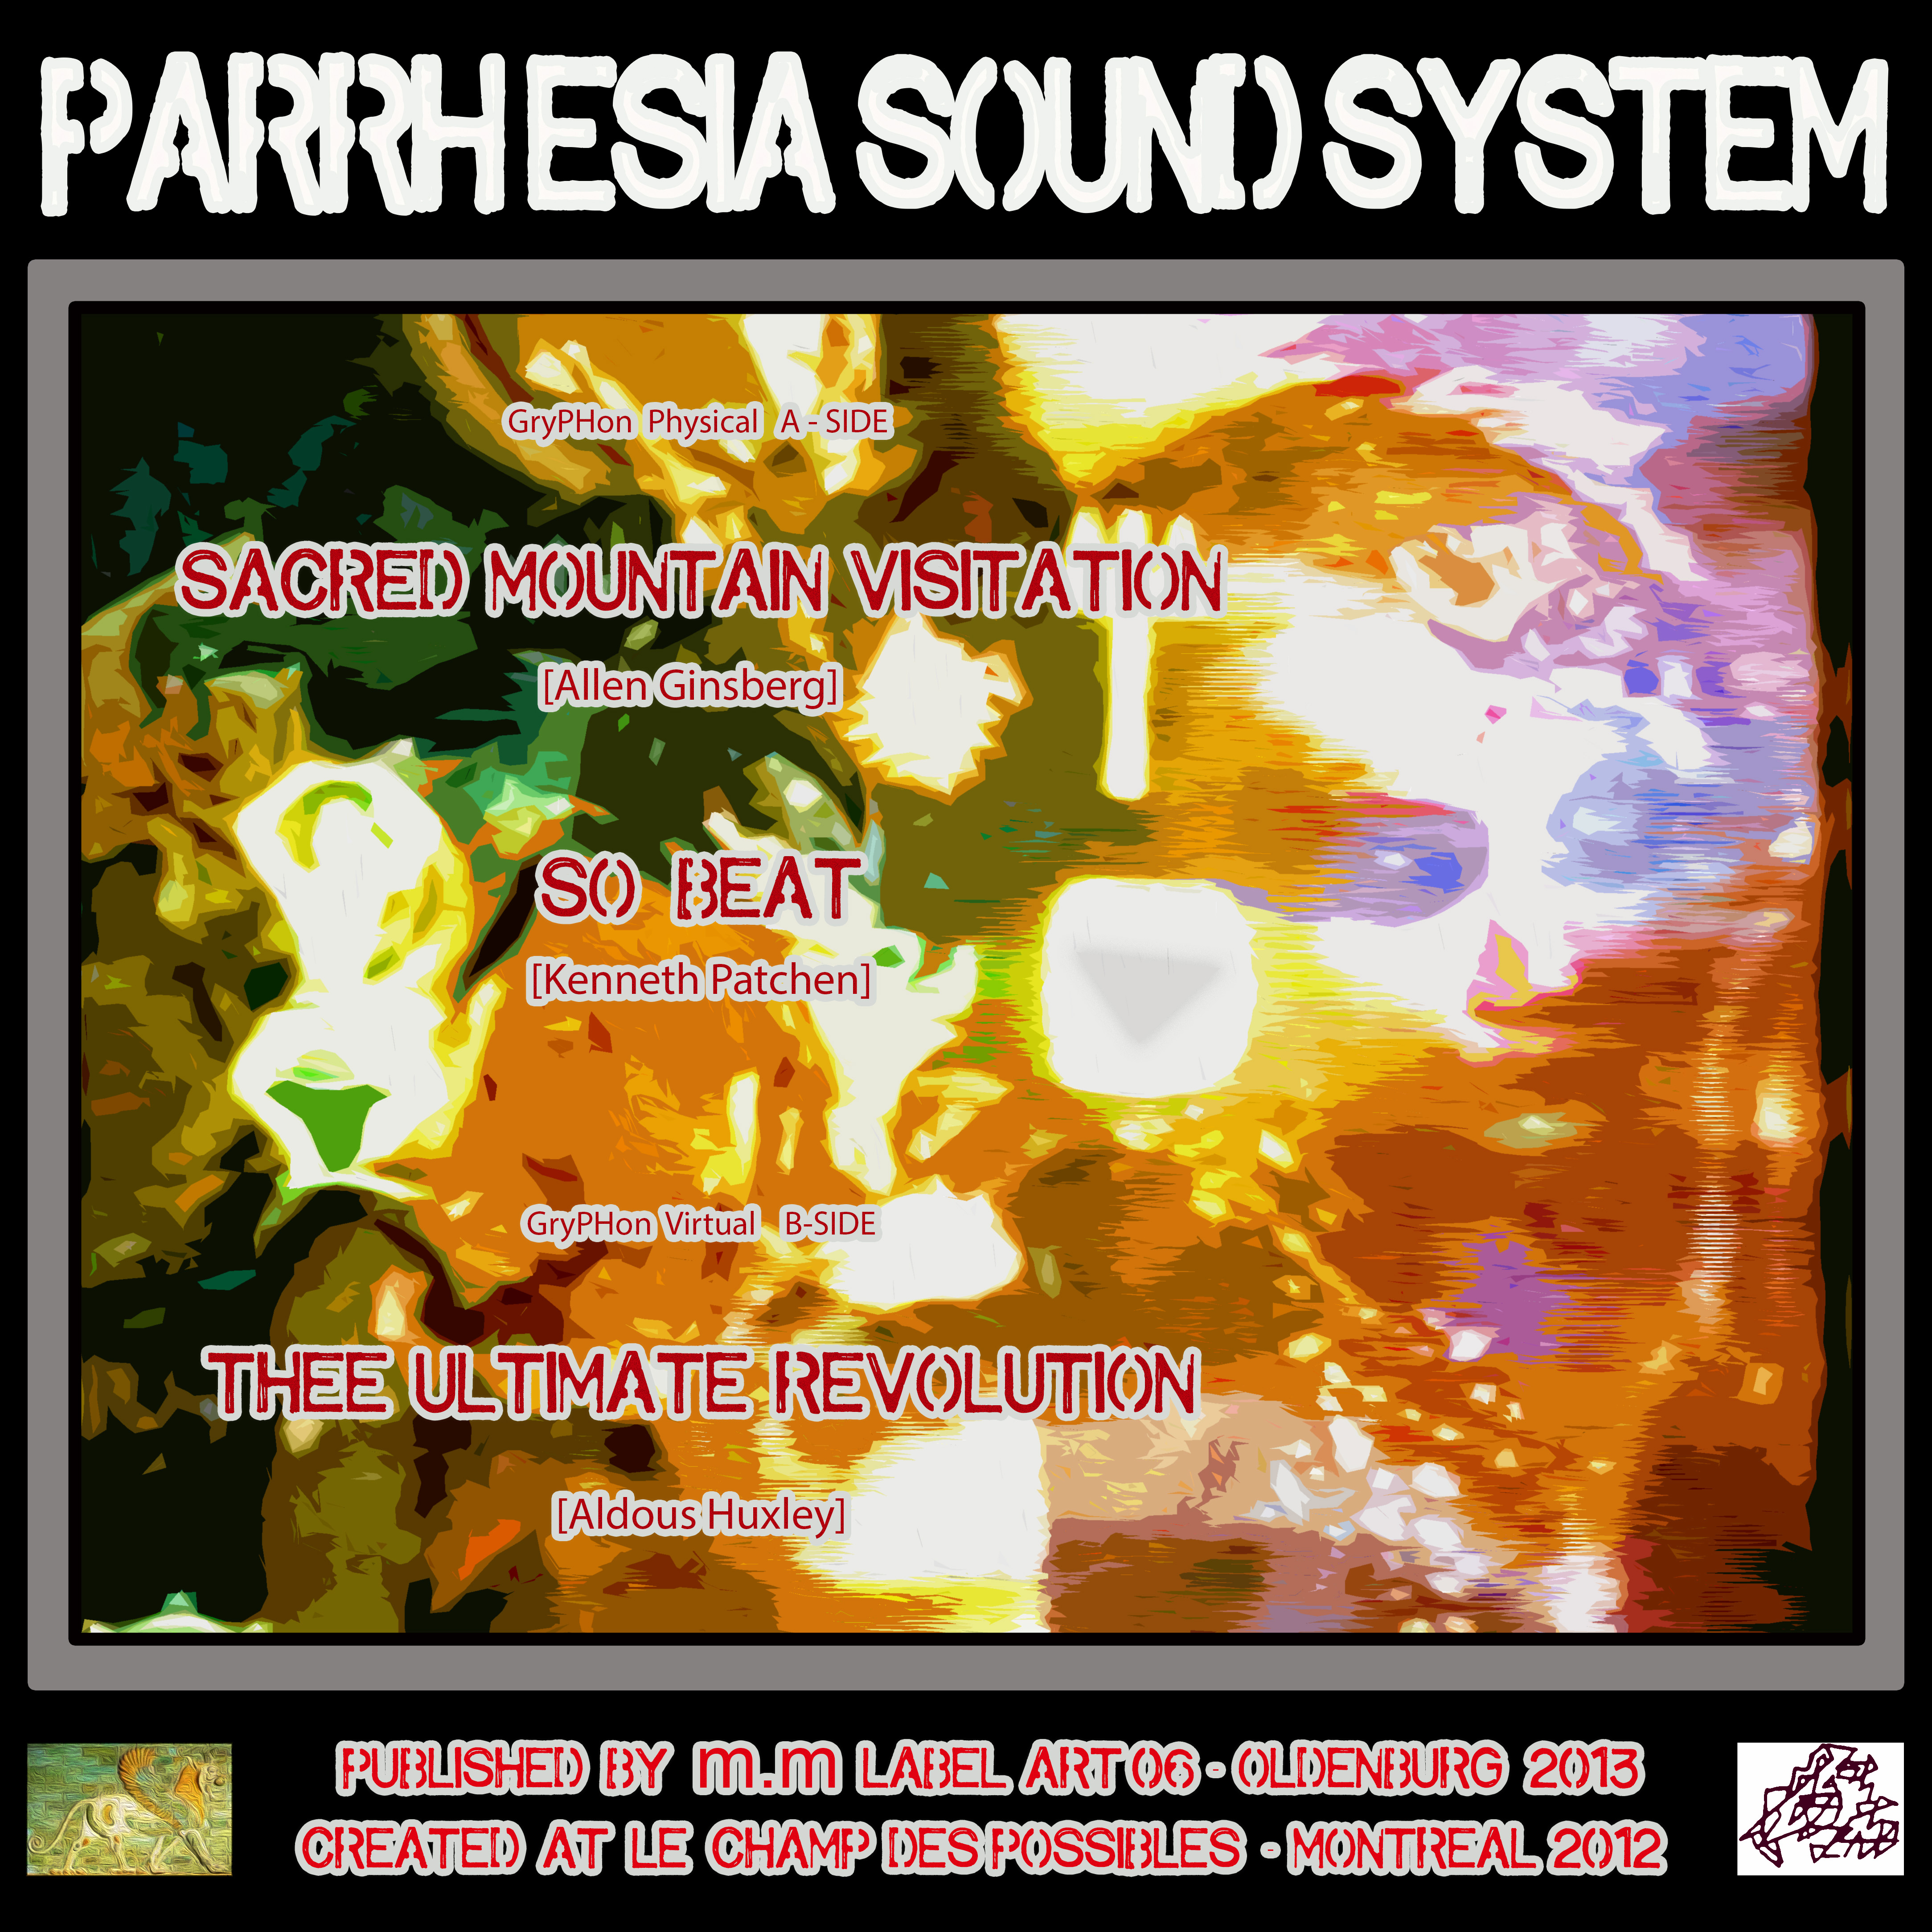 Parrhesia Sound System – GryPHon